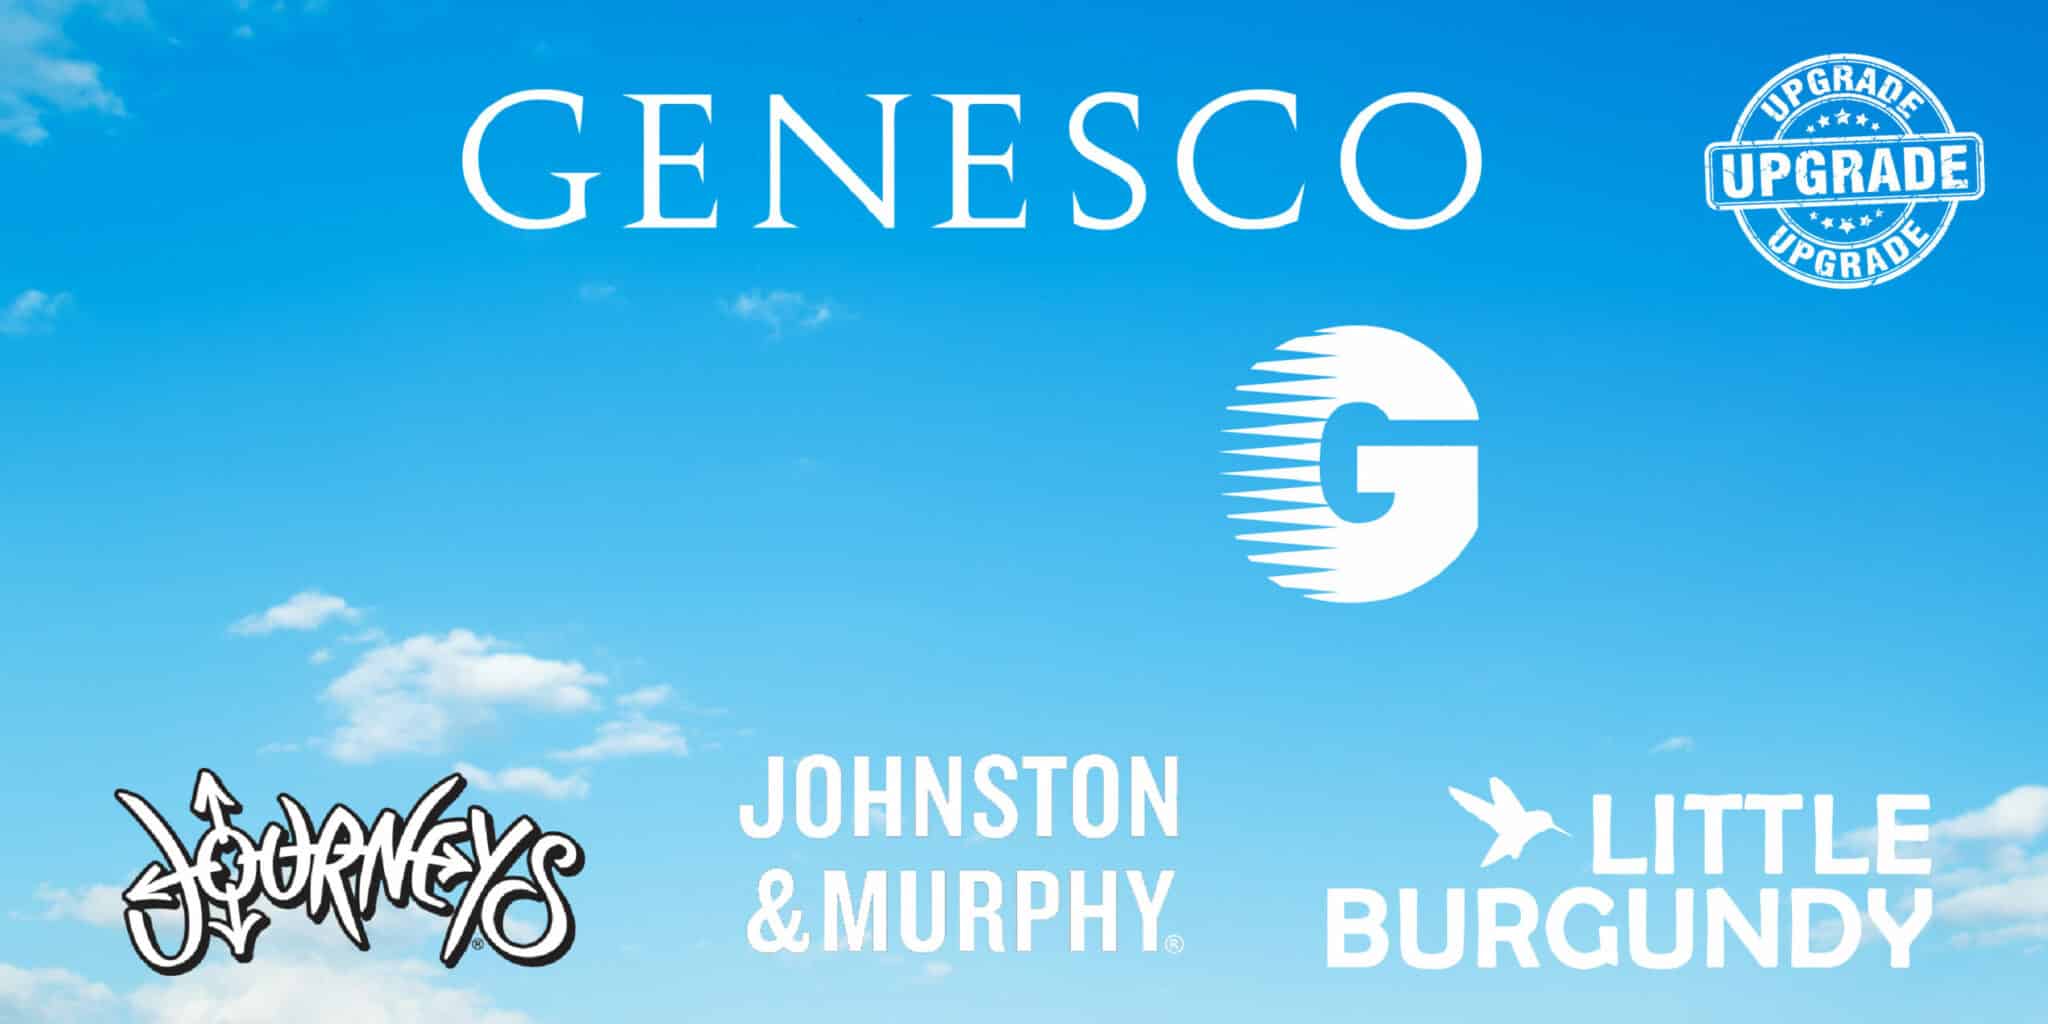 Genesco elevates merchandising capabilities with jestas retail platform press release